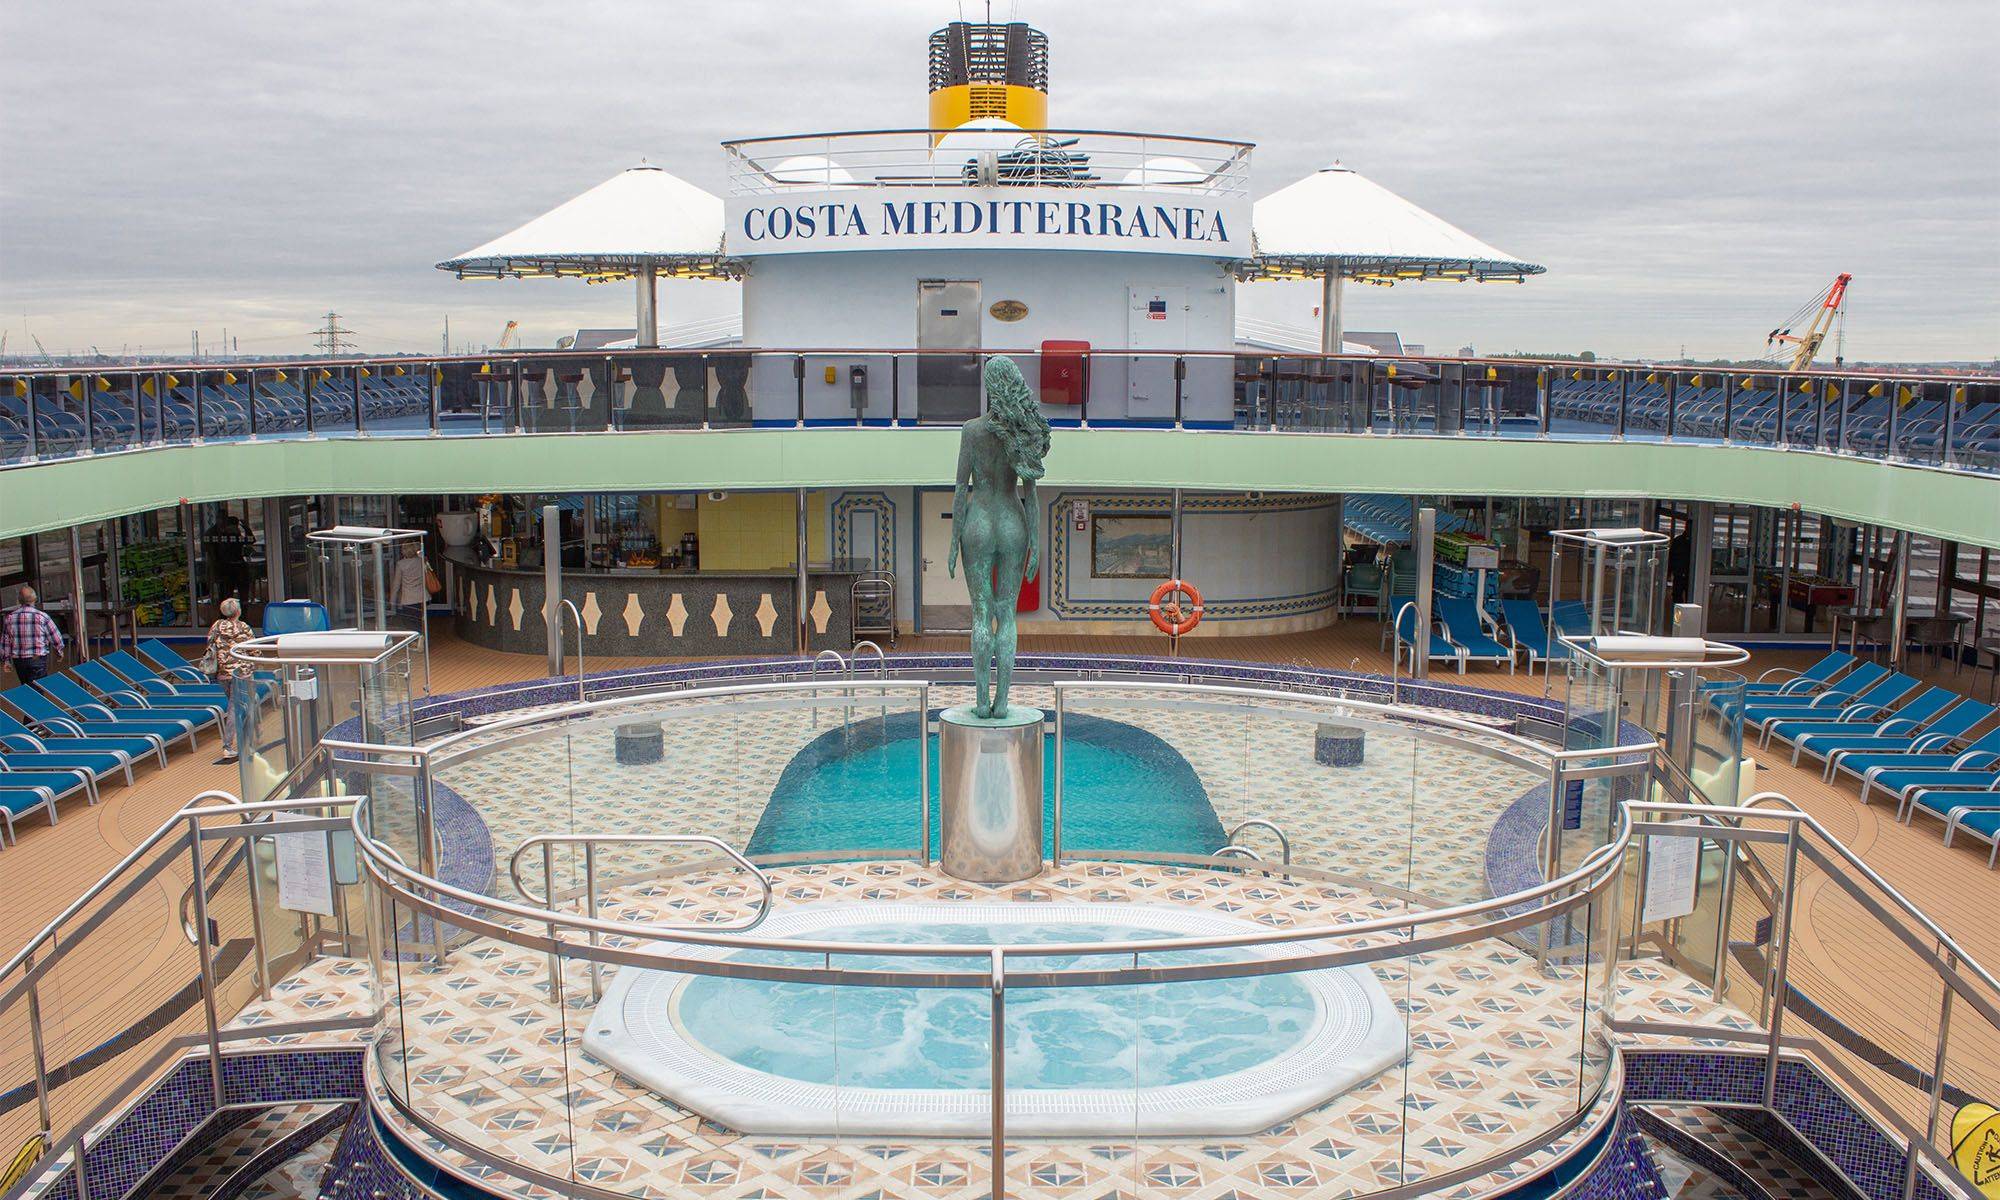 Costa Mediterranea Pool Deck